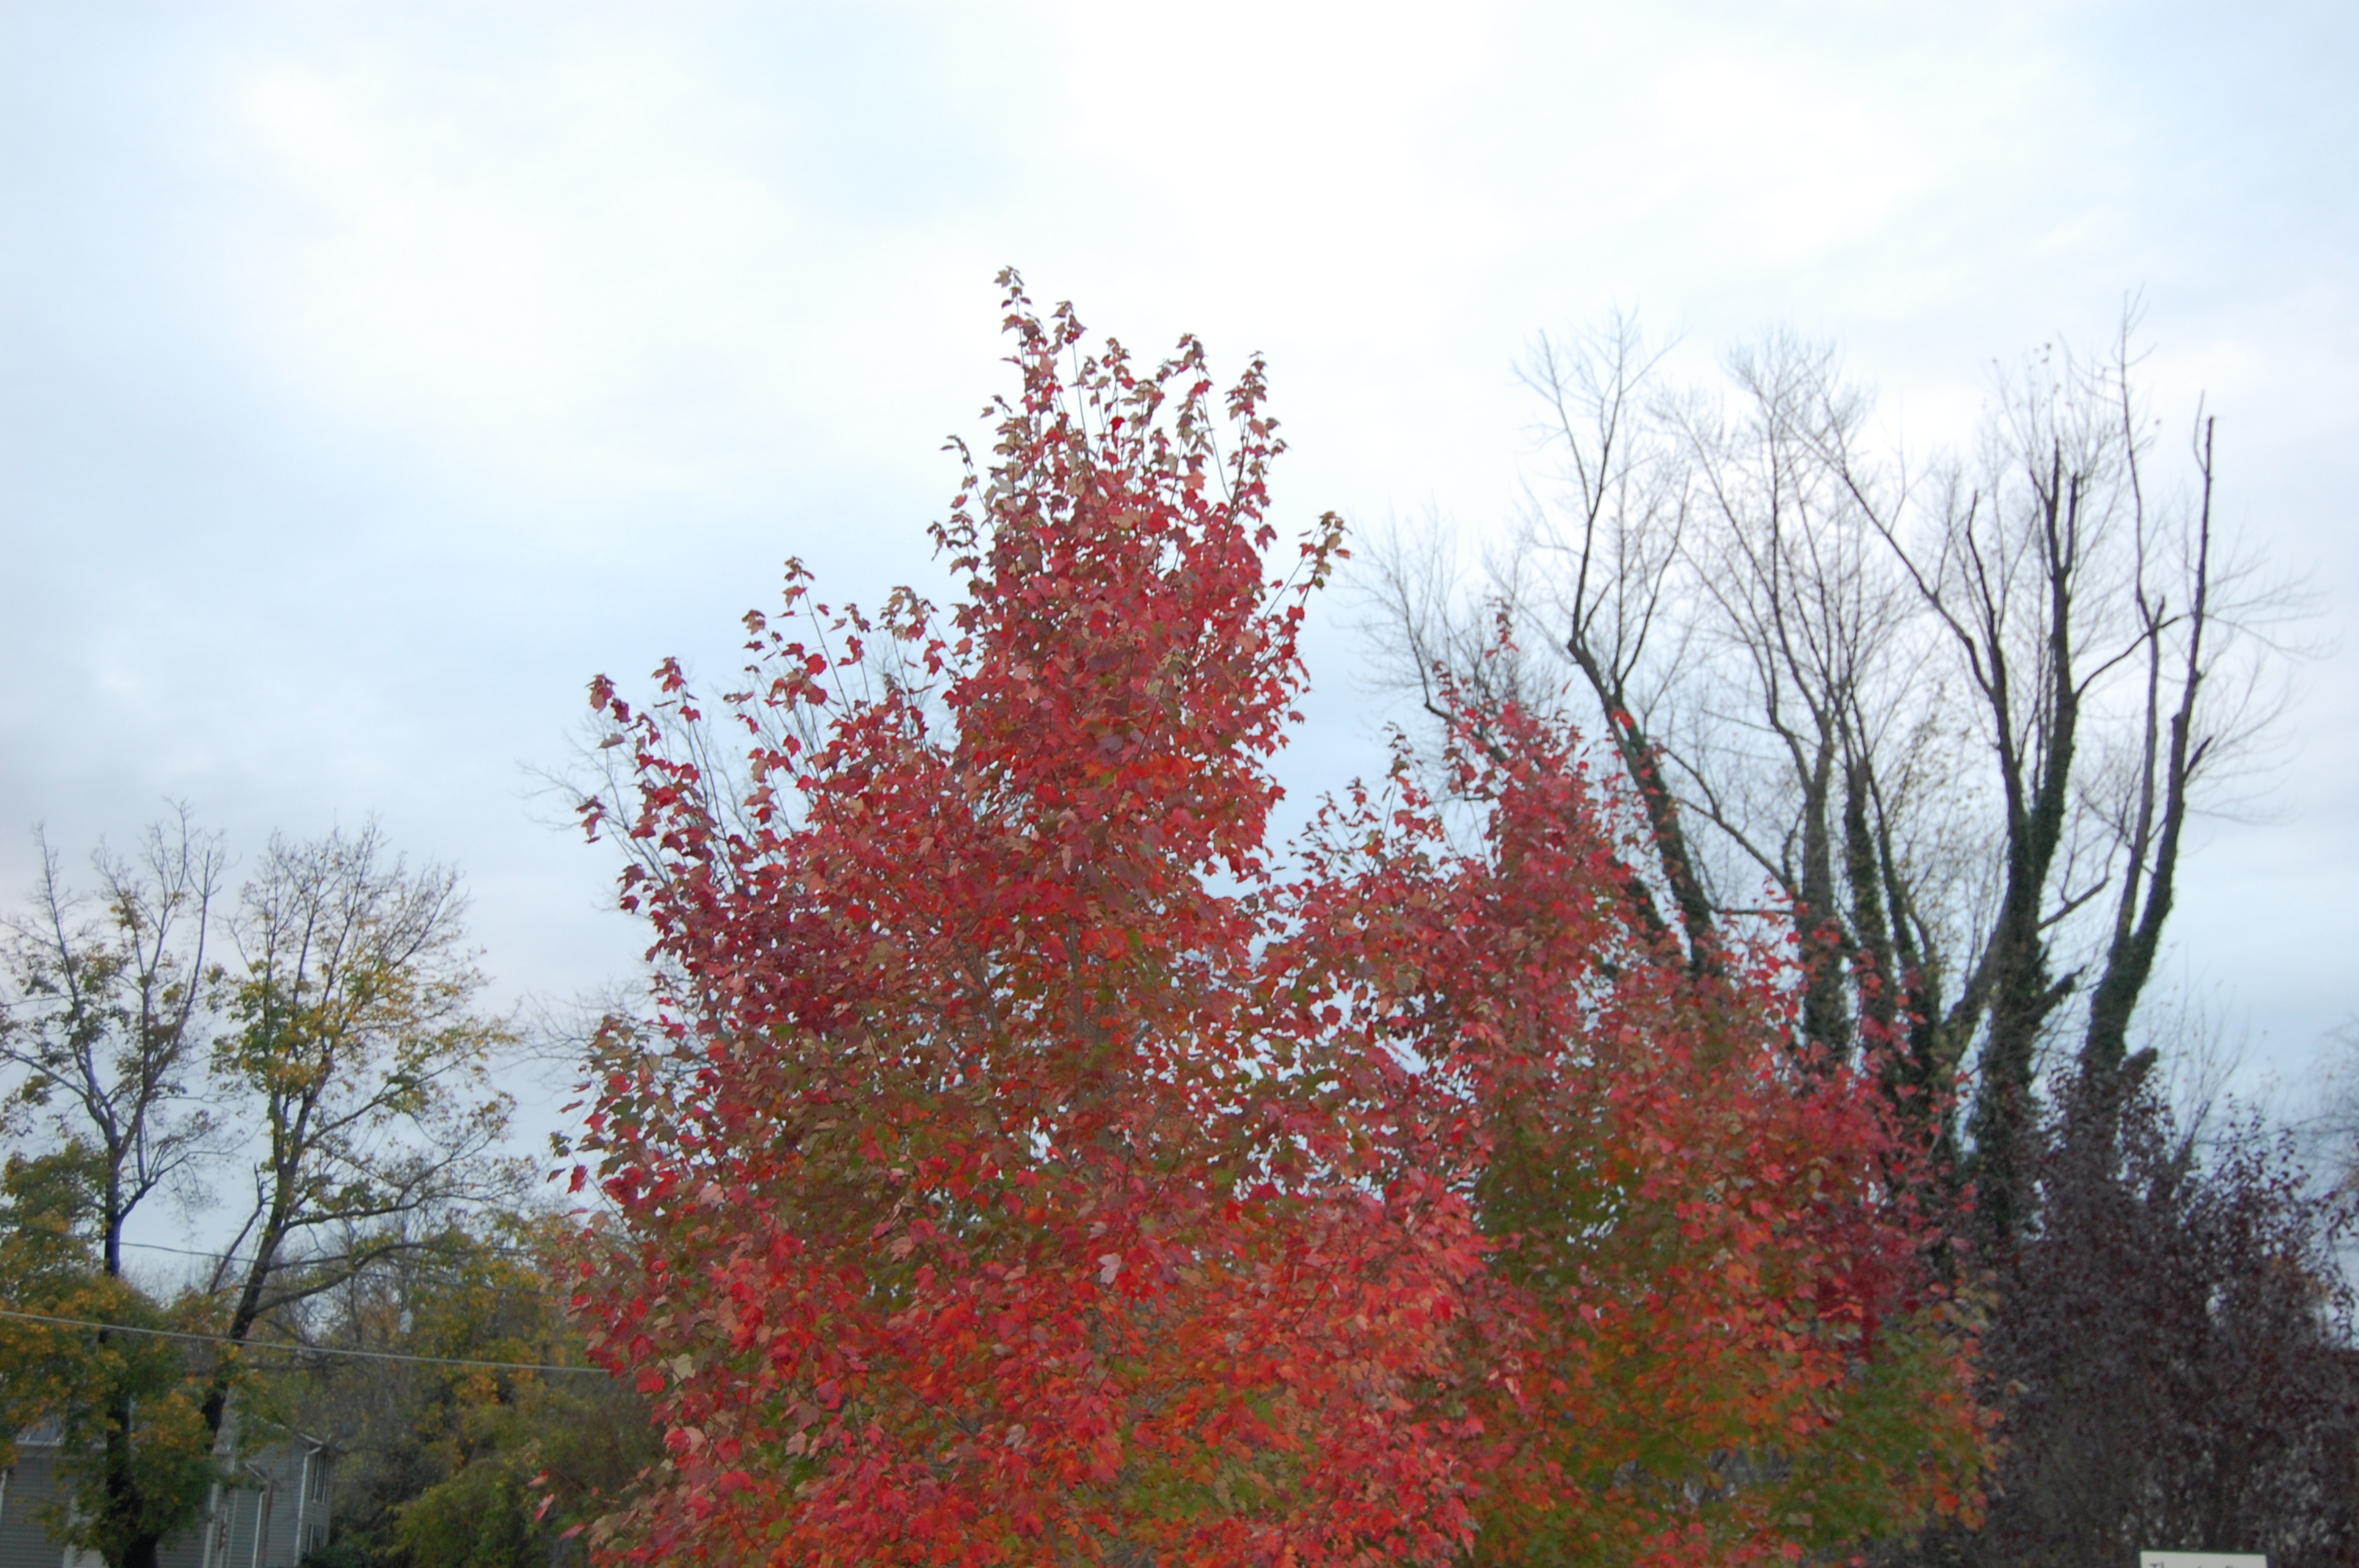 Red Tree, Dead Tree: Photo by Sharon Burtner